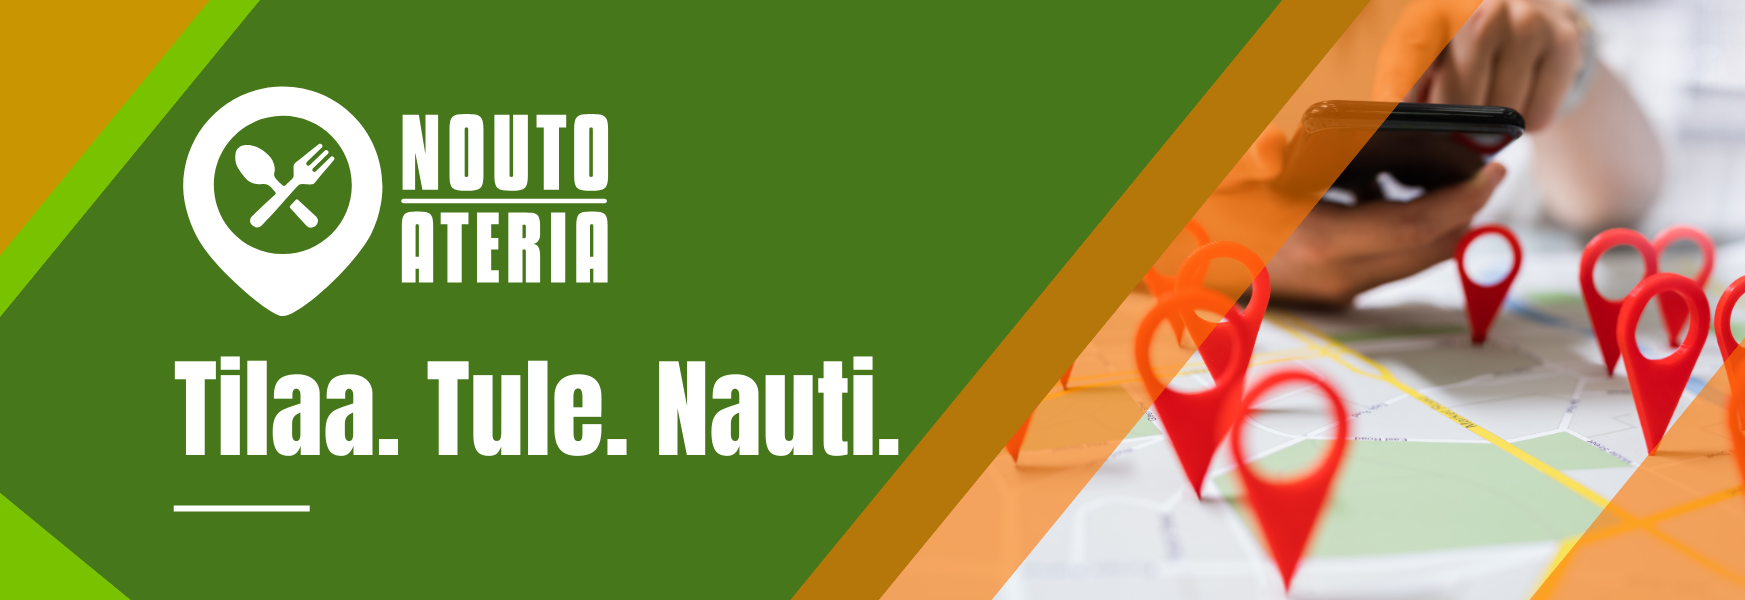 NoutoAteria logo with tag line: Tilaa - Tule - Nauti